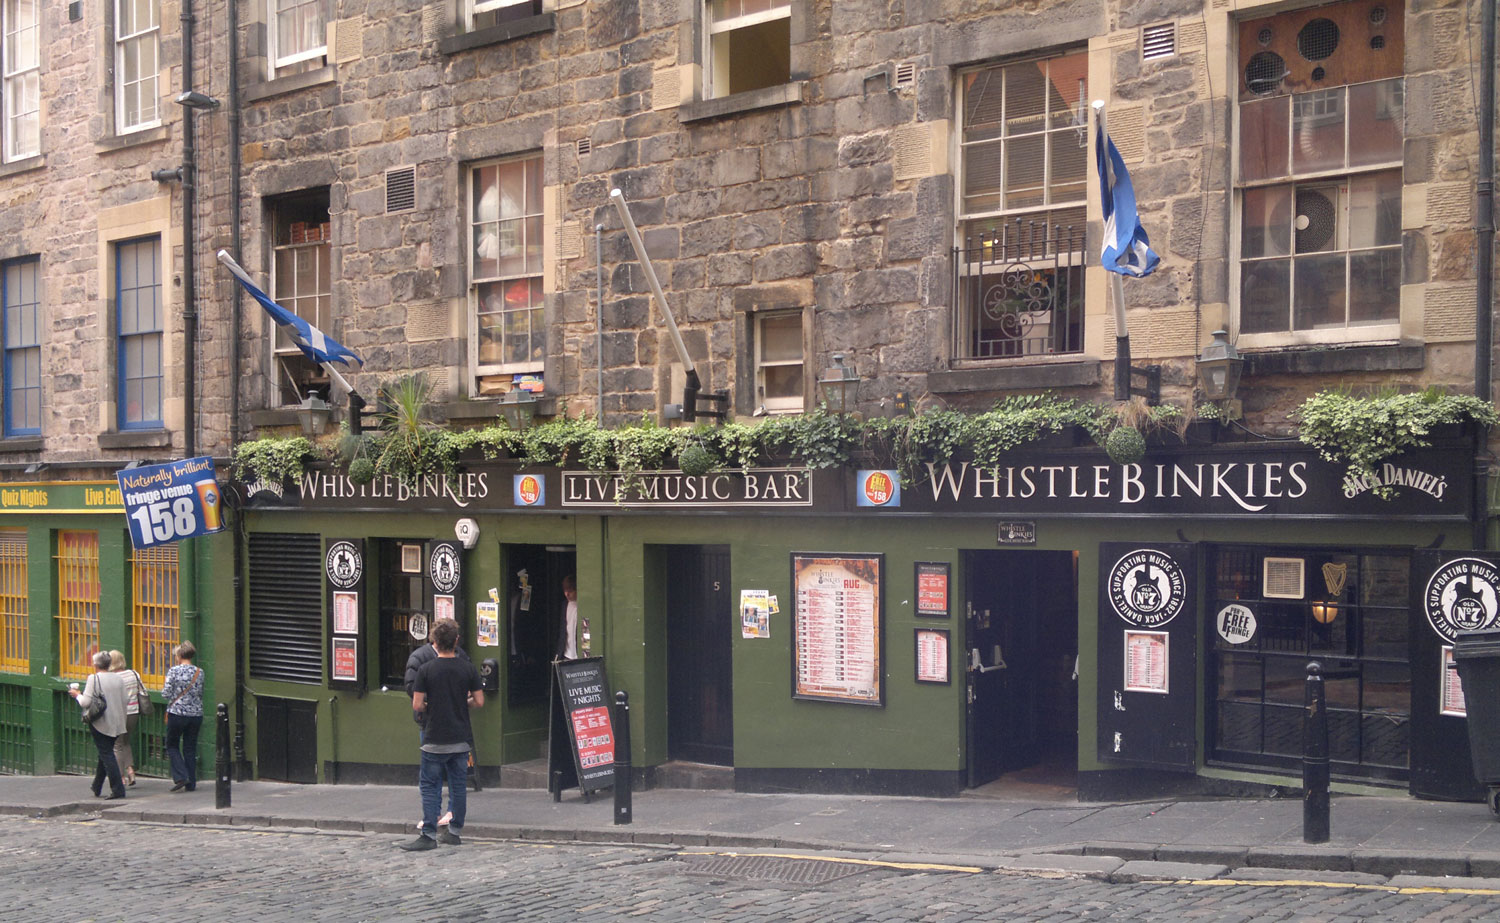 Exterior of Whistlebinkies pub